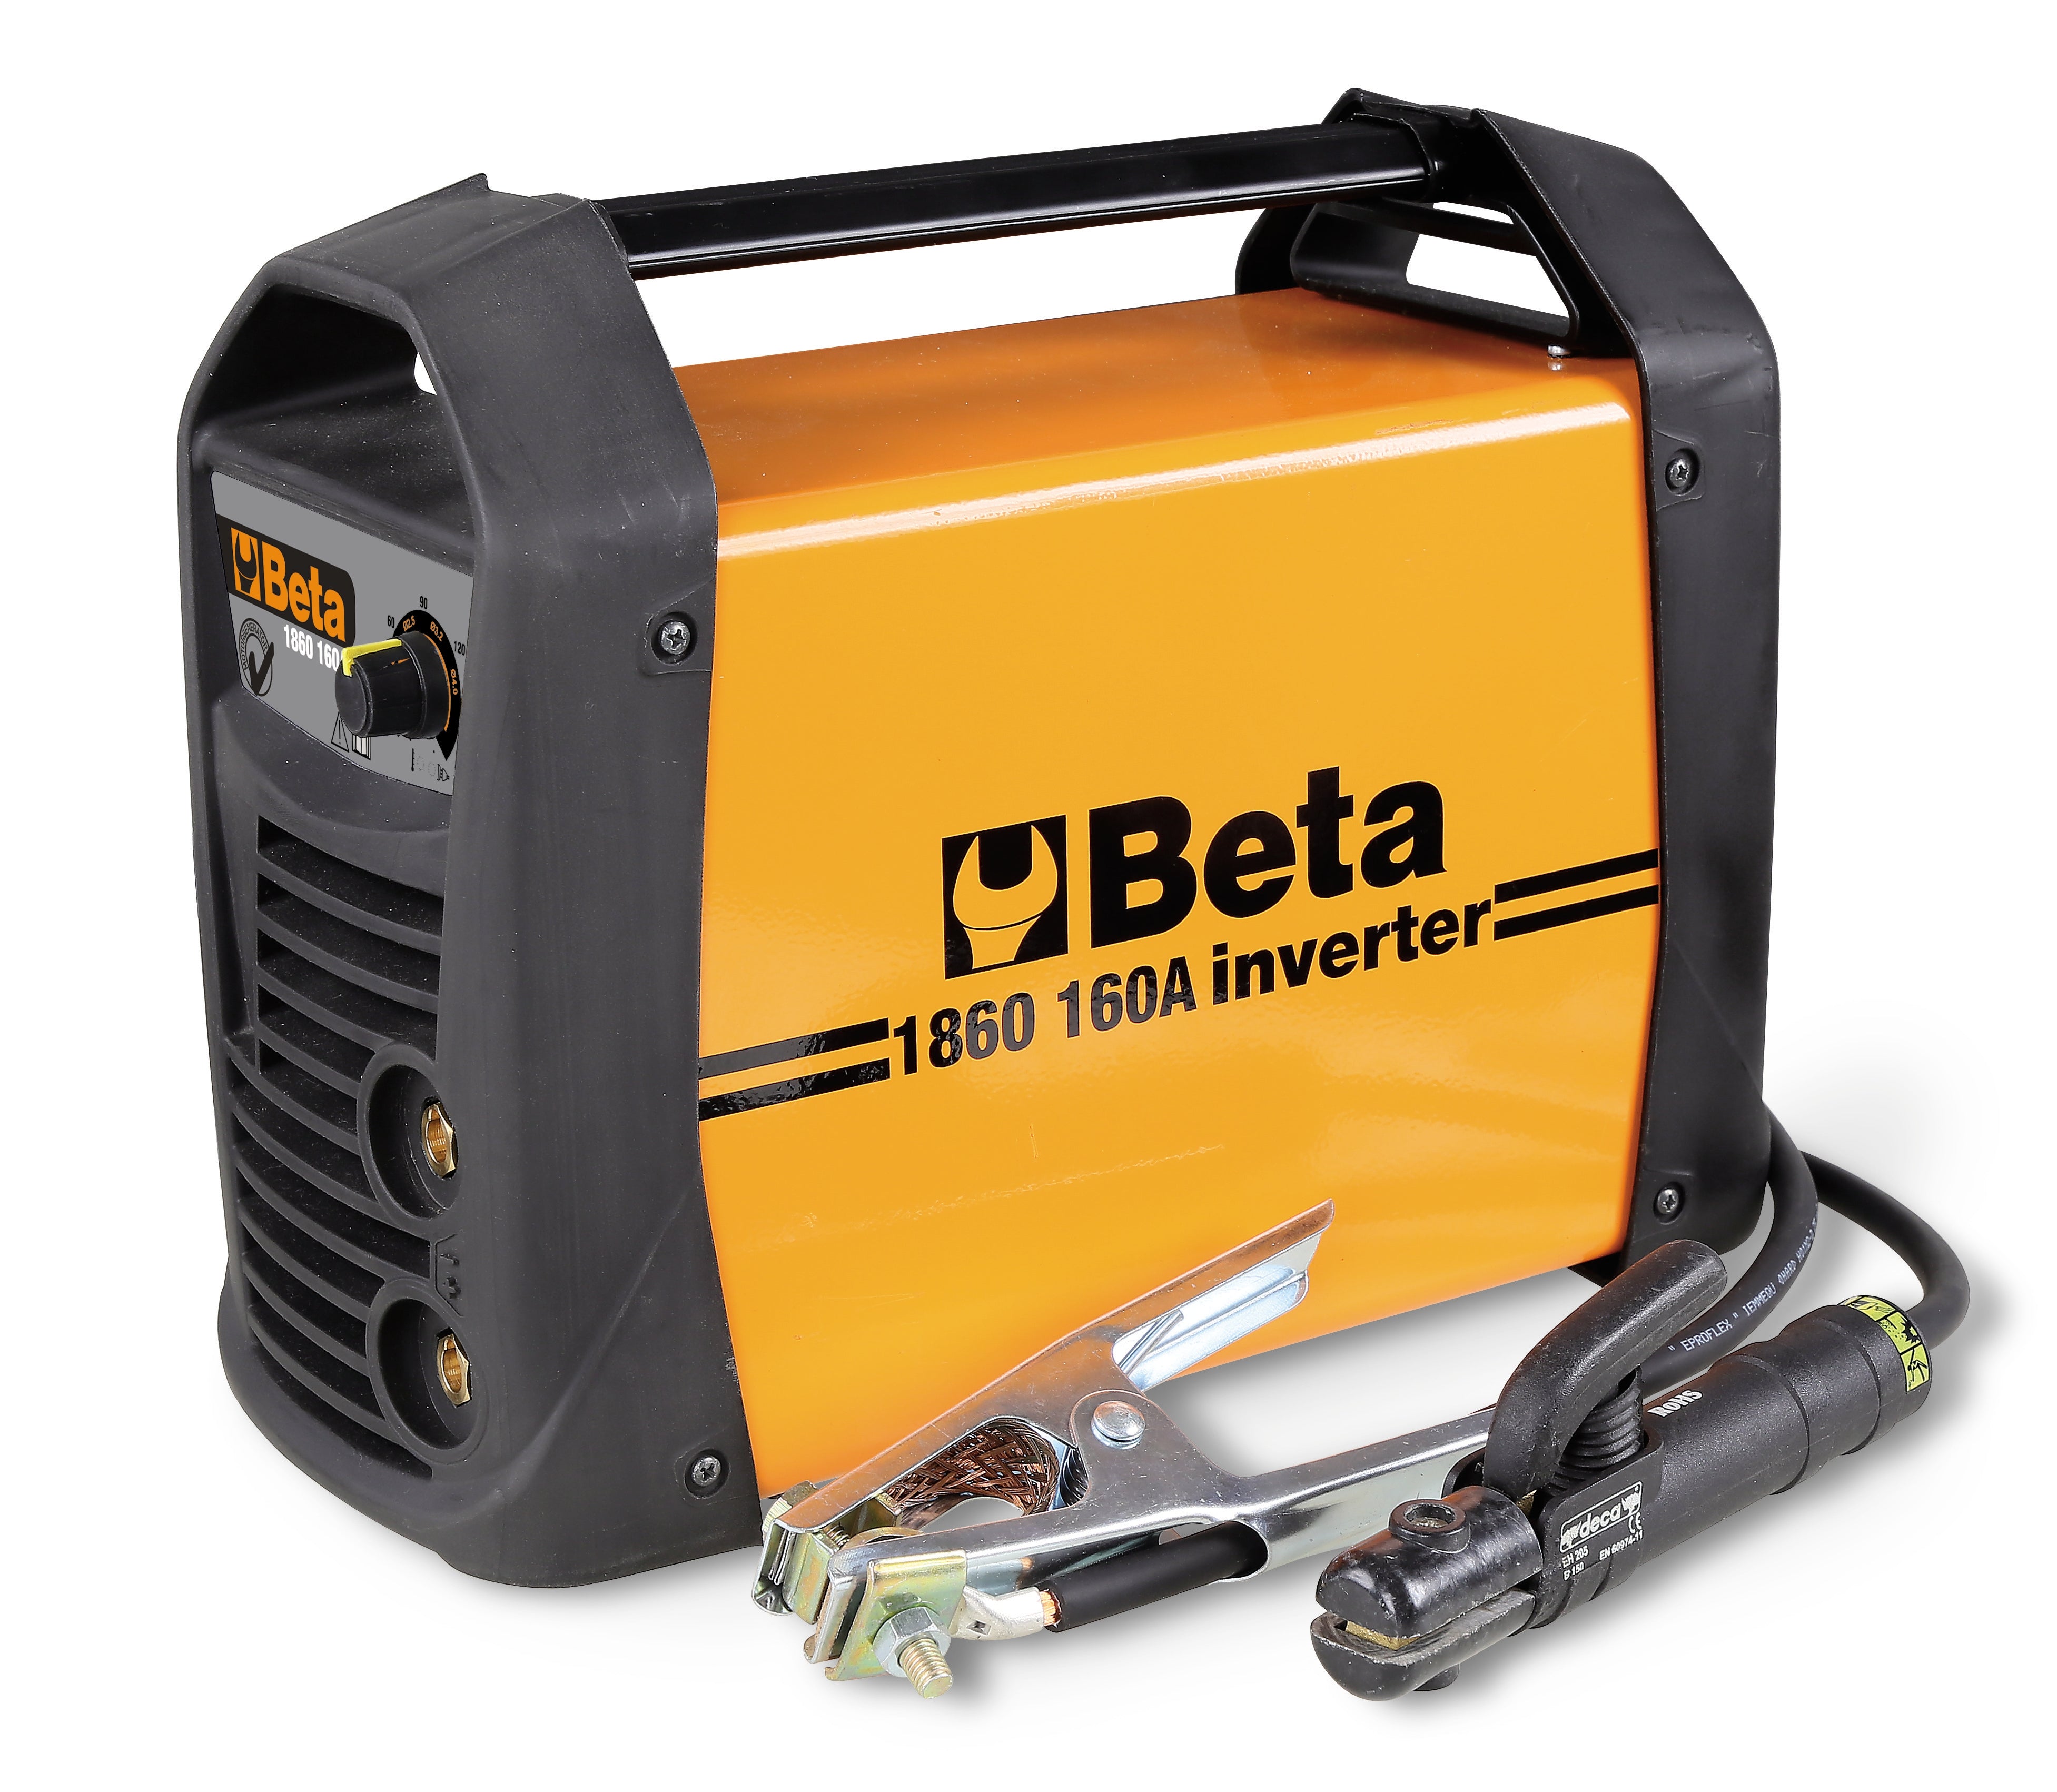 Saldatrice Beta 1860 160A Inverter